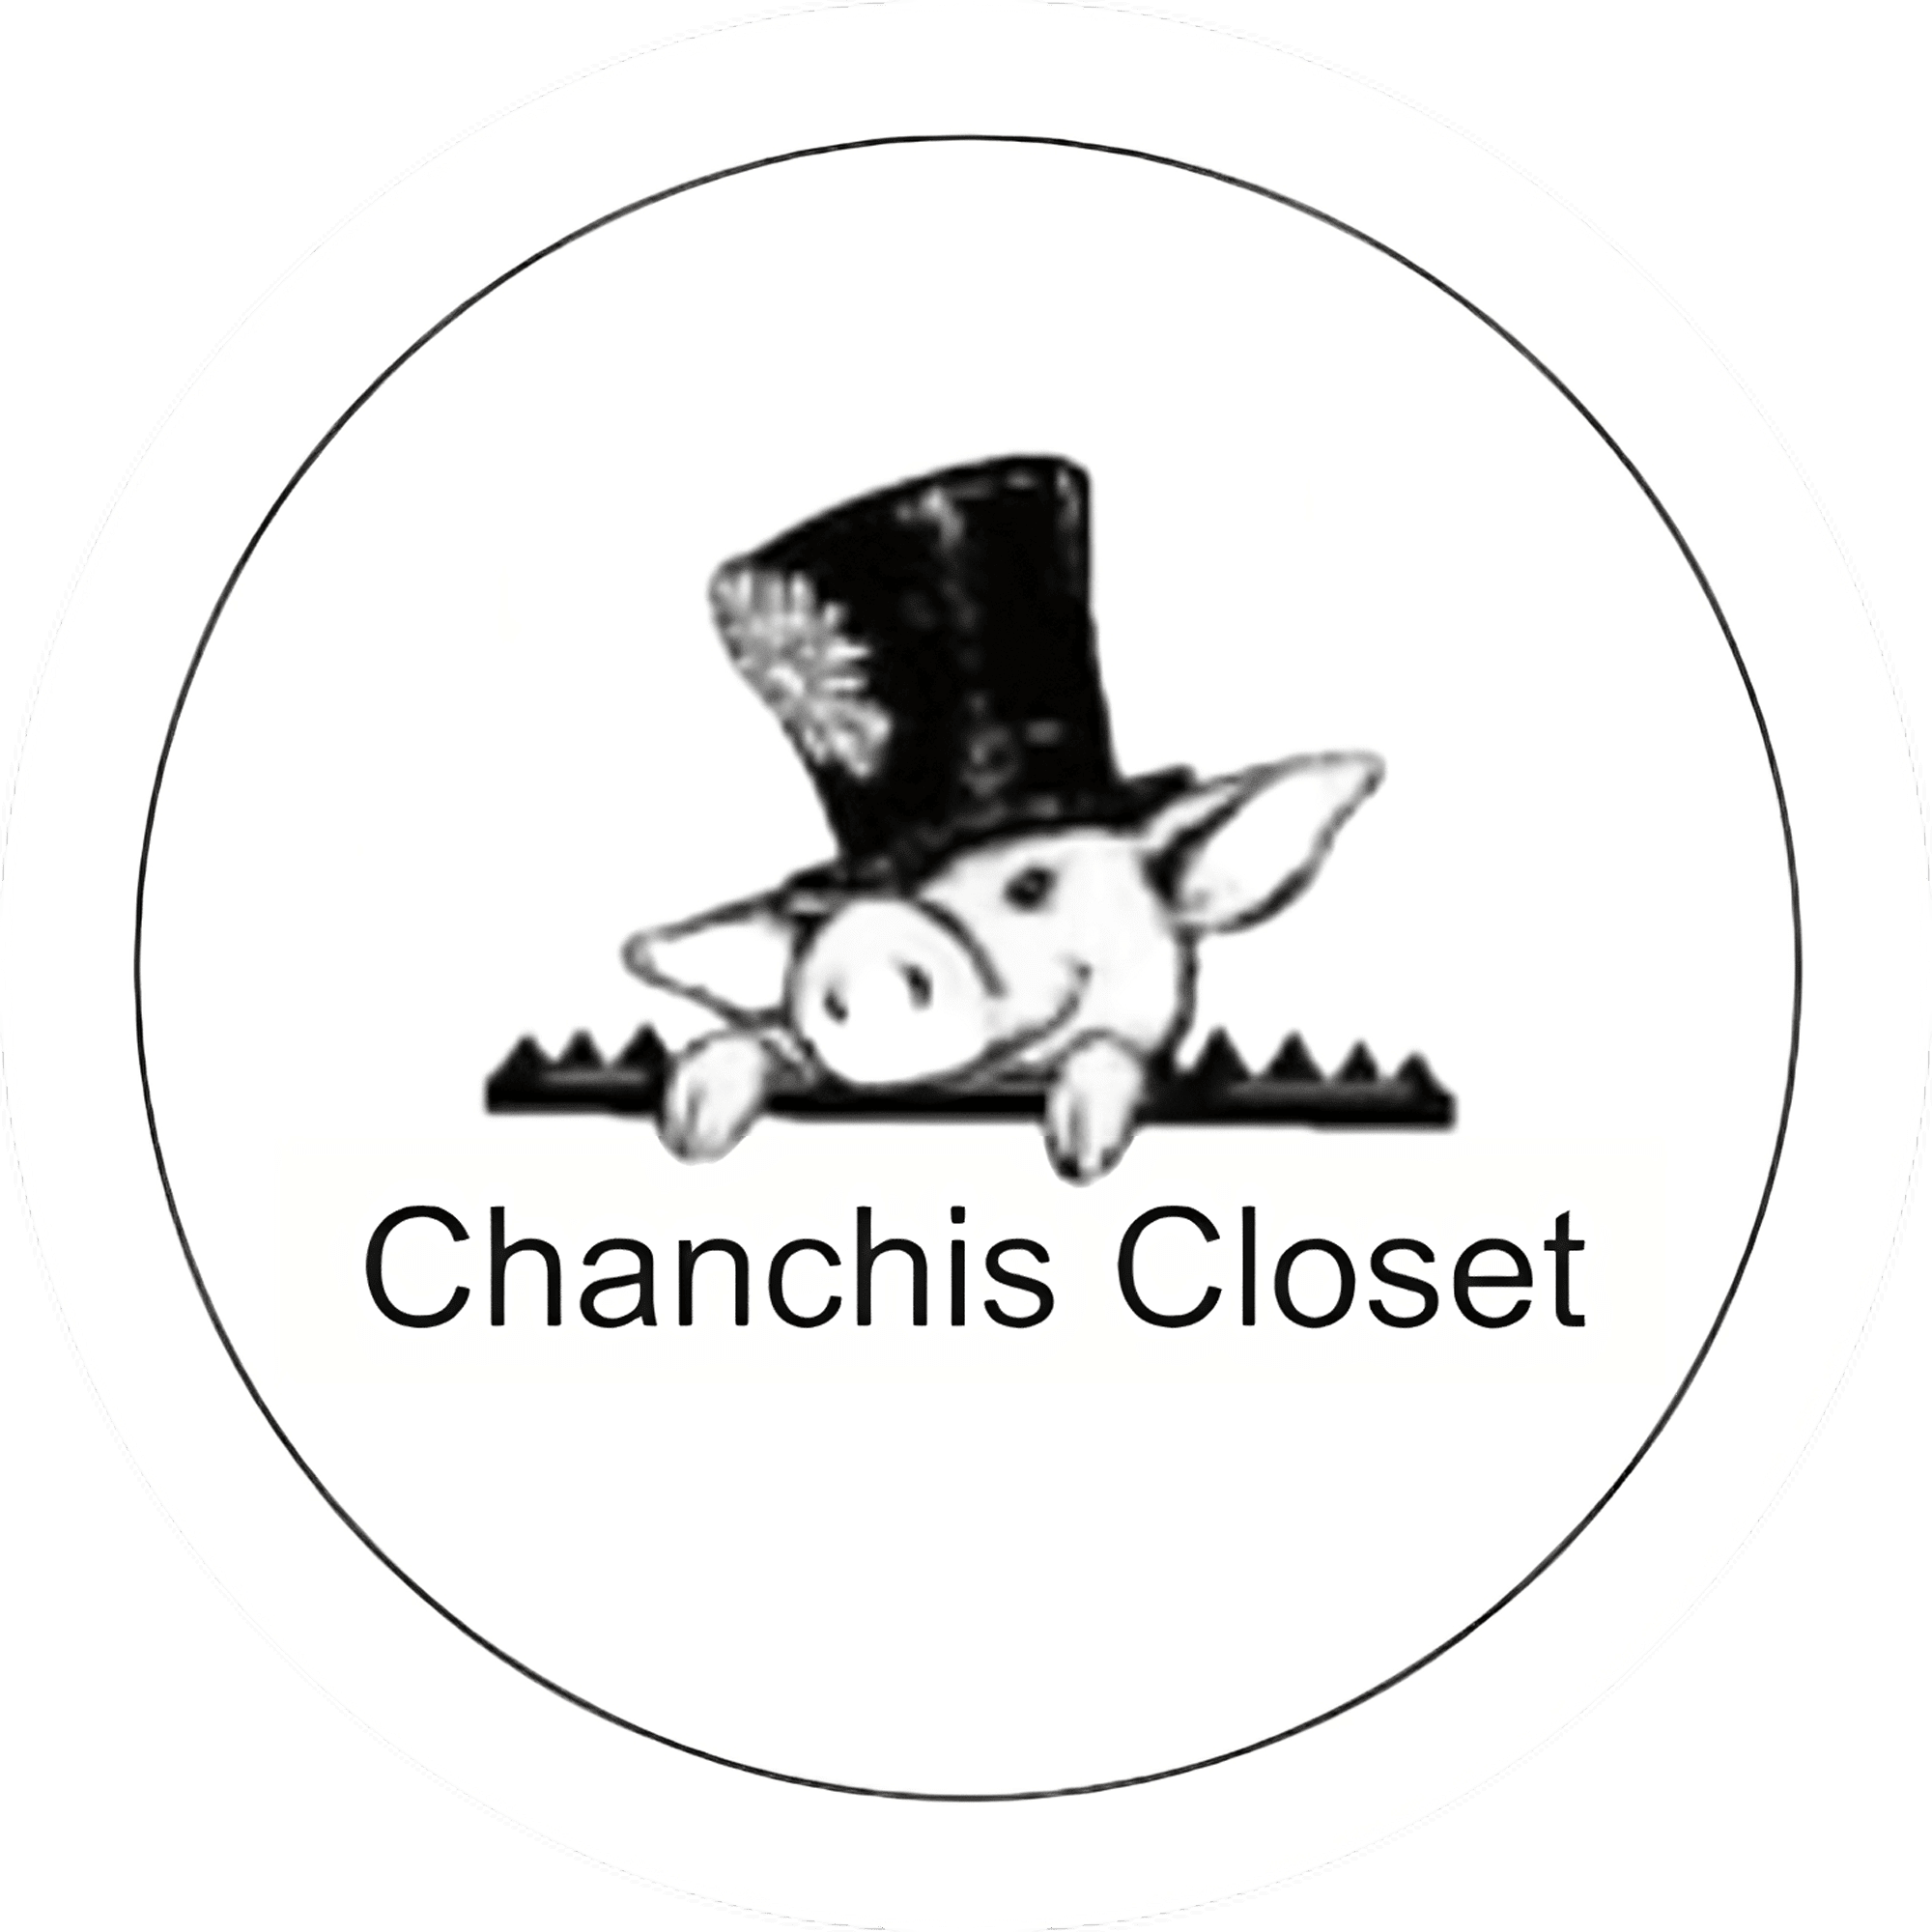 Chanchis Closet